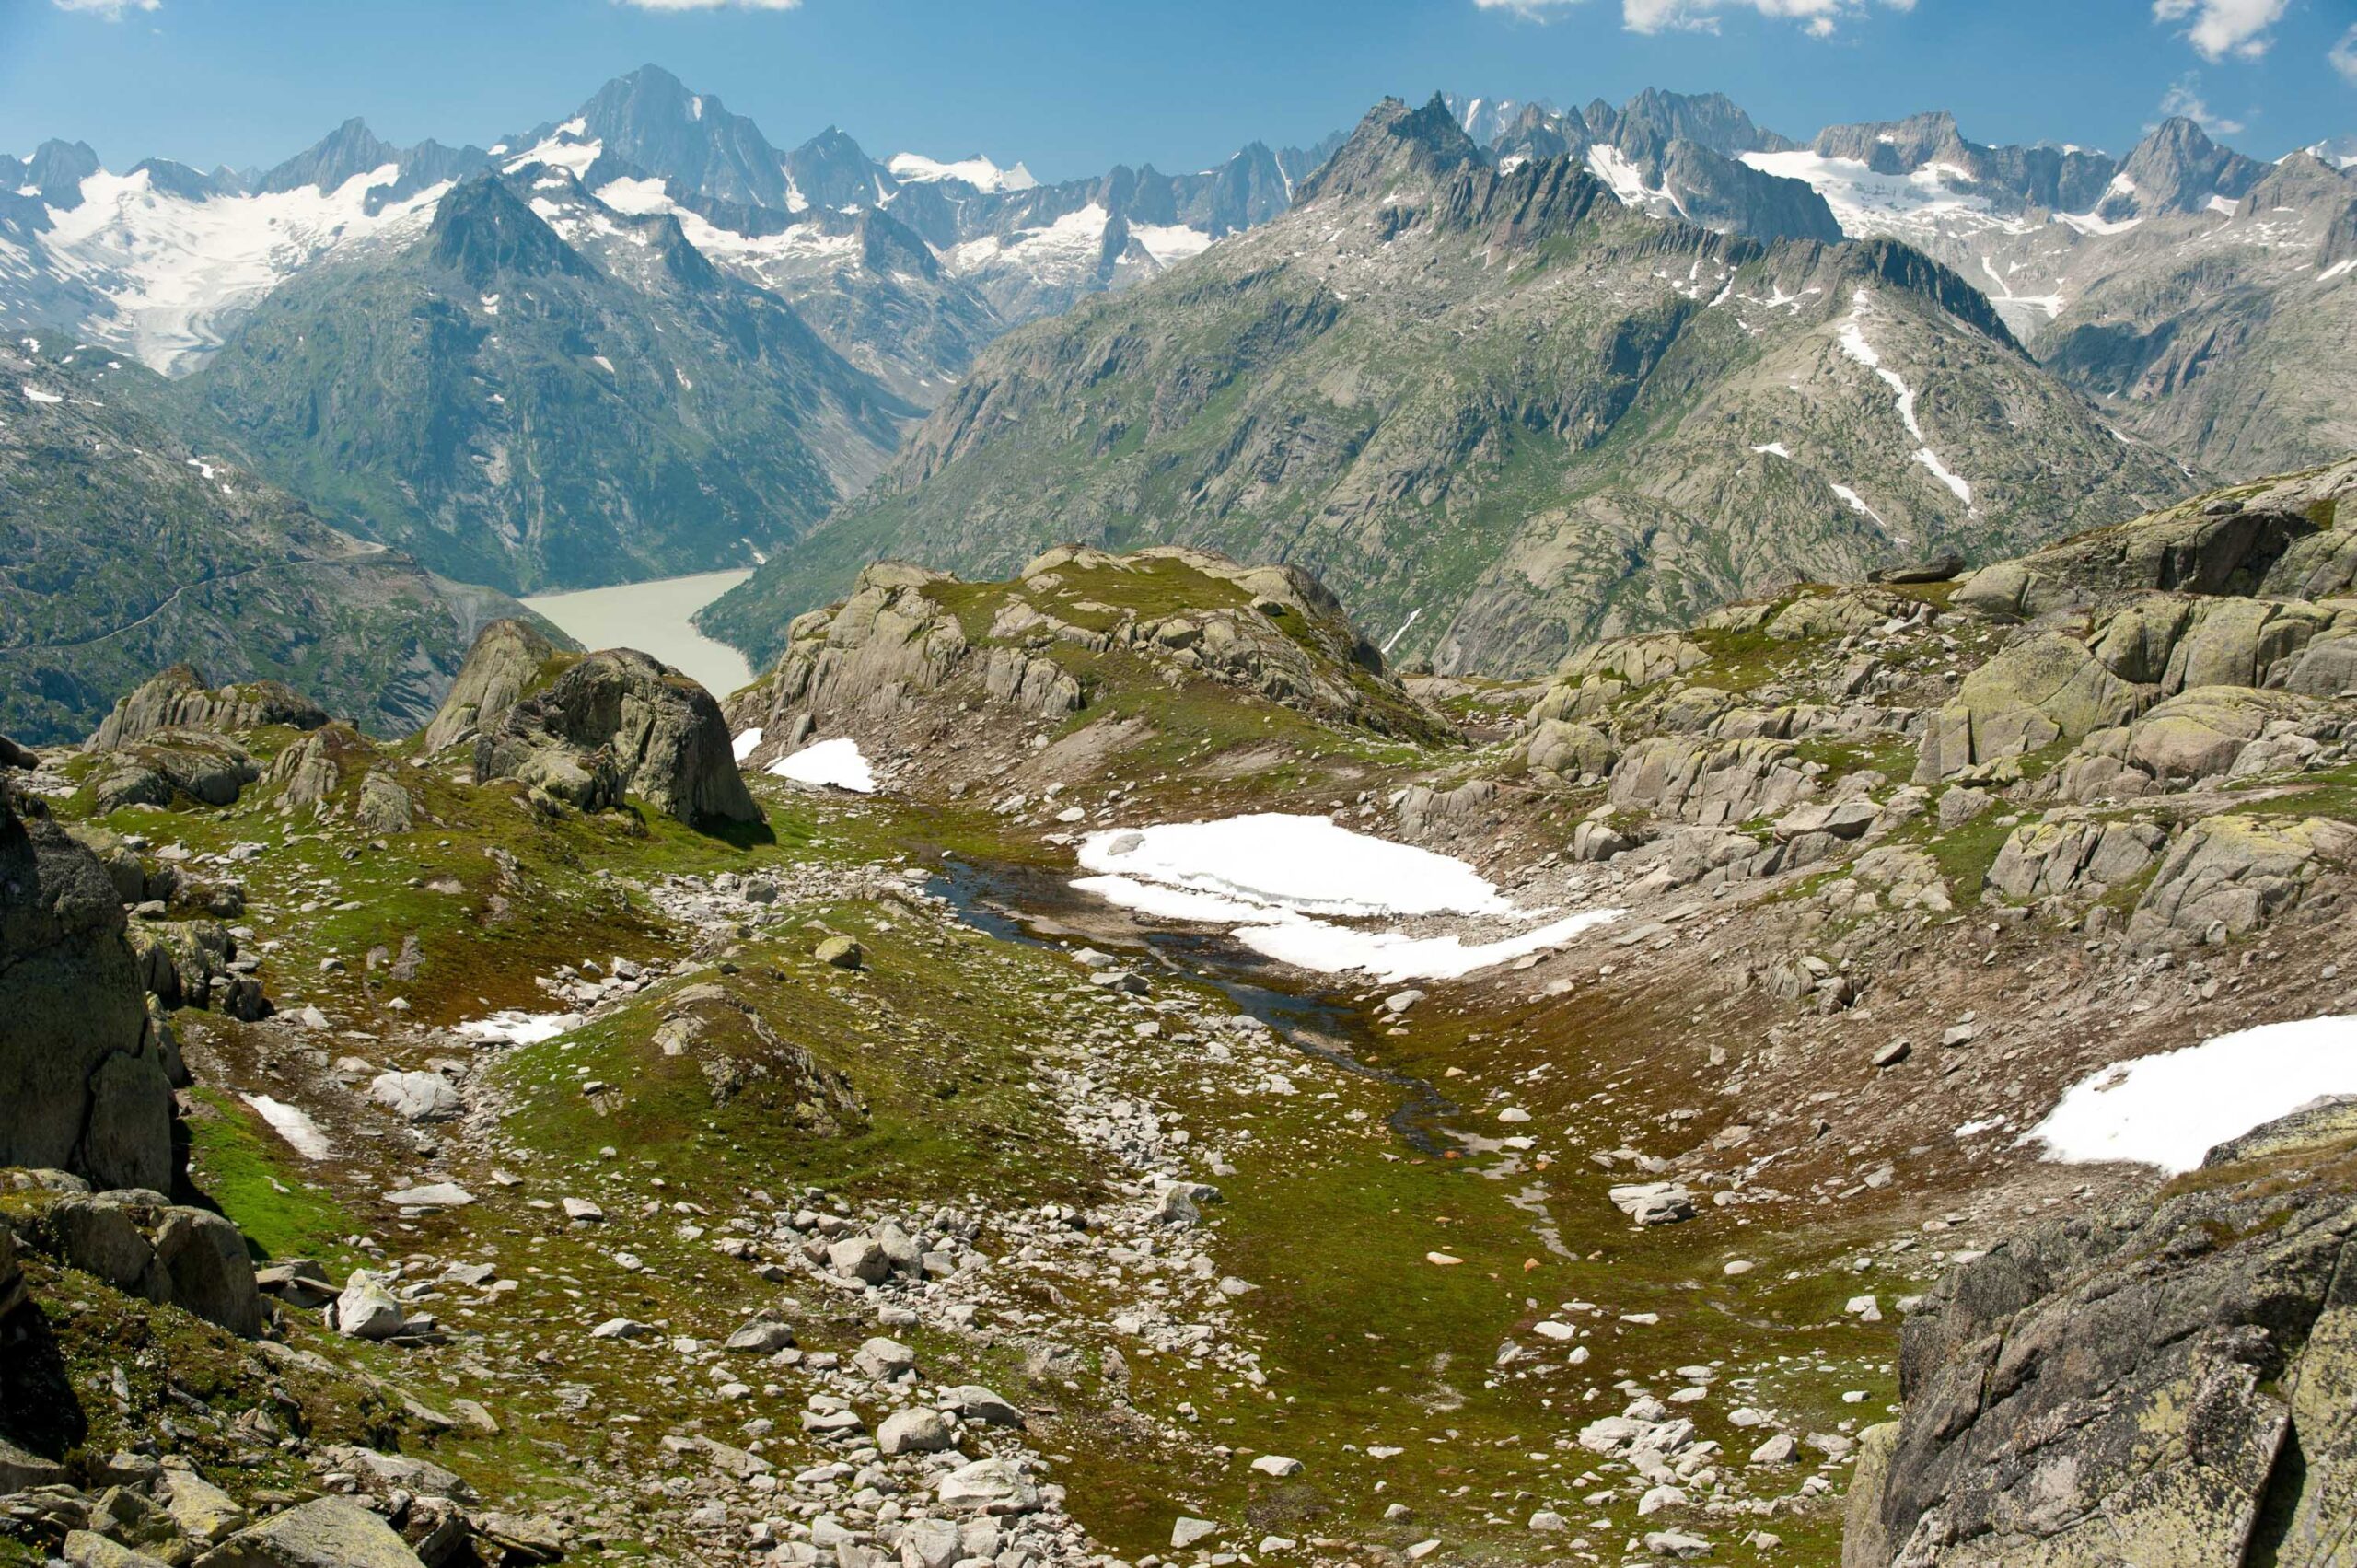 De Berner Alpen gezien vanaf de Grimselpass.